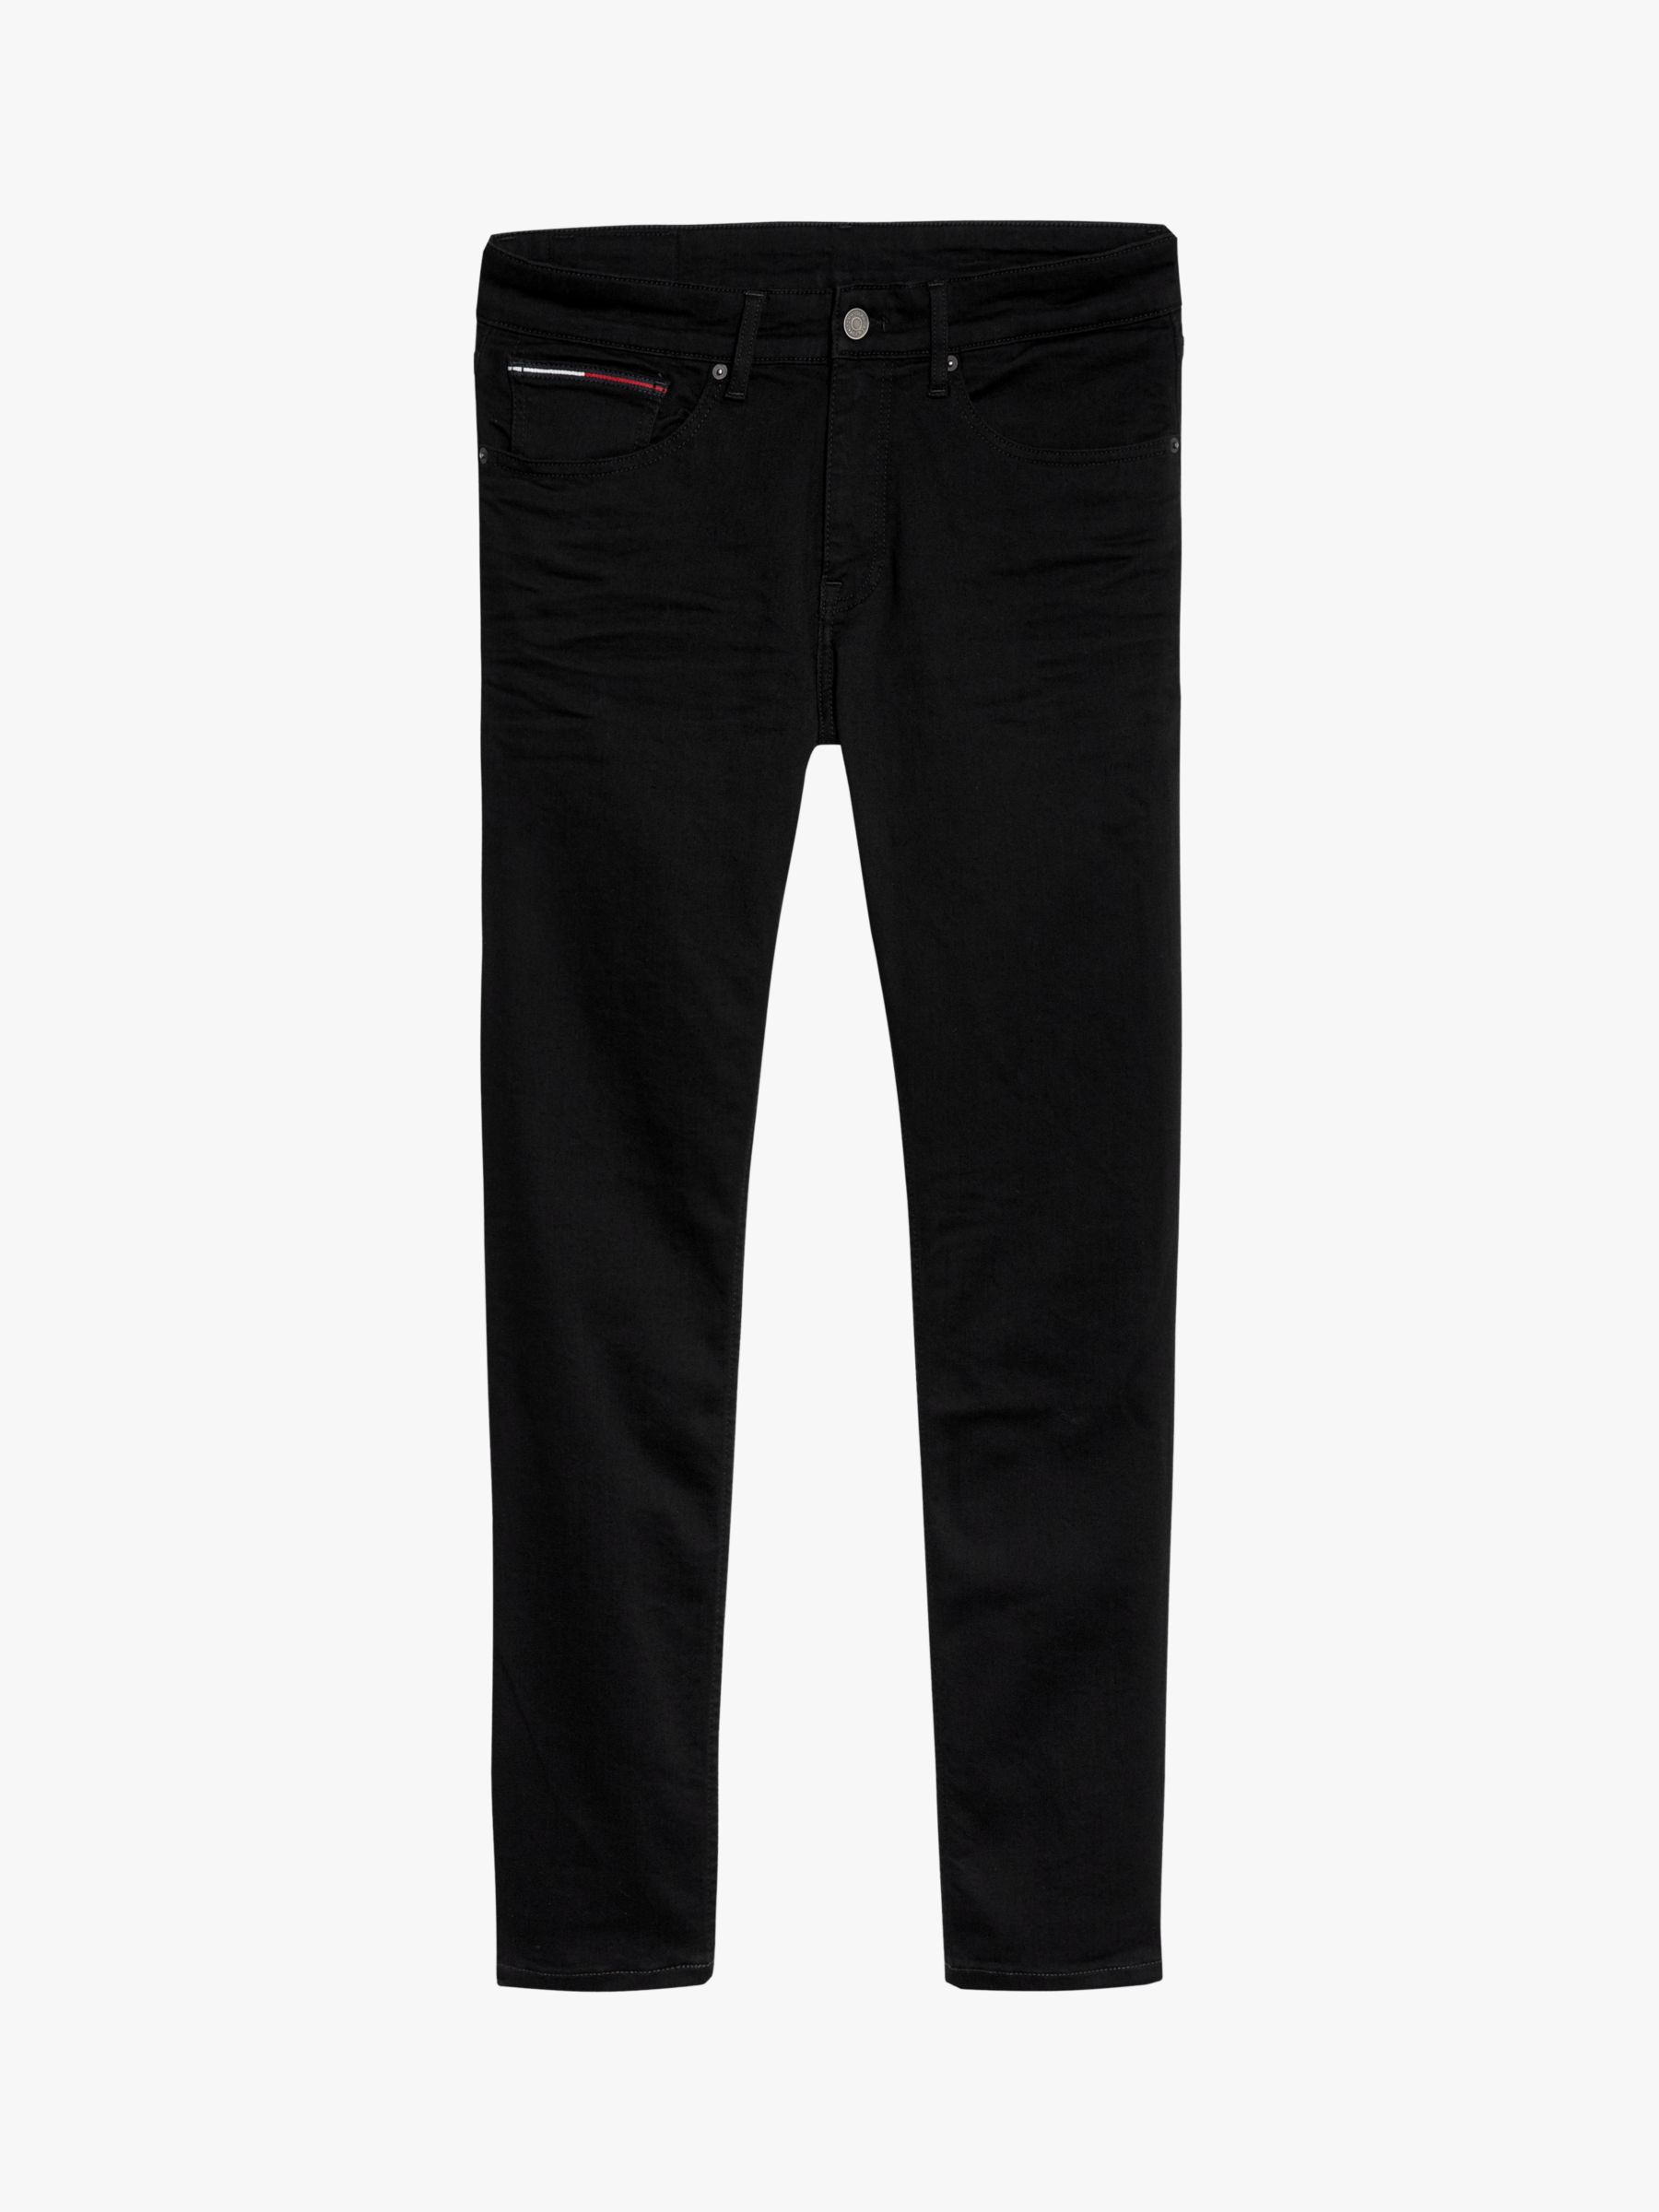 Tommy Jeans Slim Fit Denim Jeans, Black at John Lewis & Partners